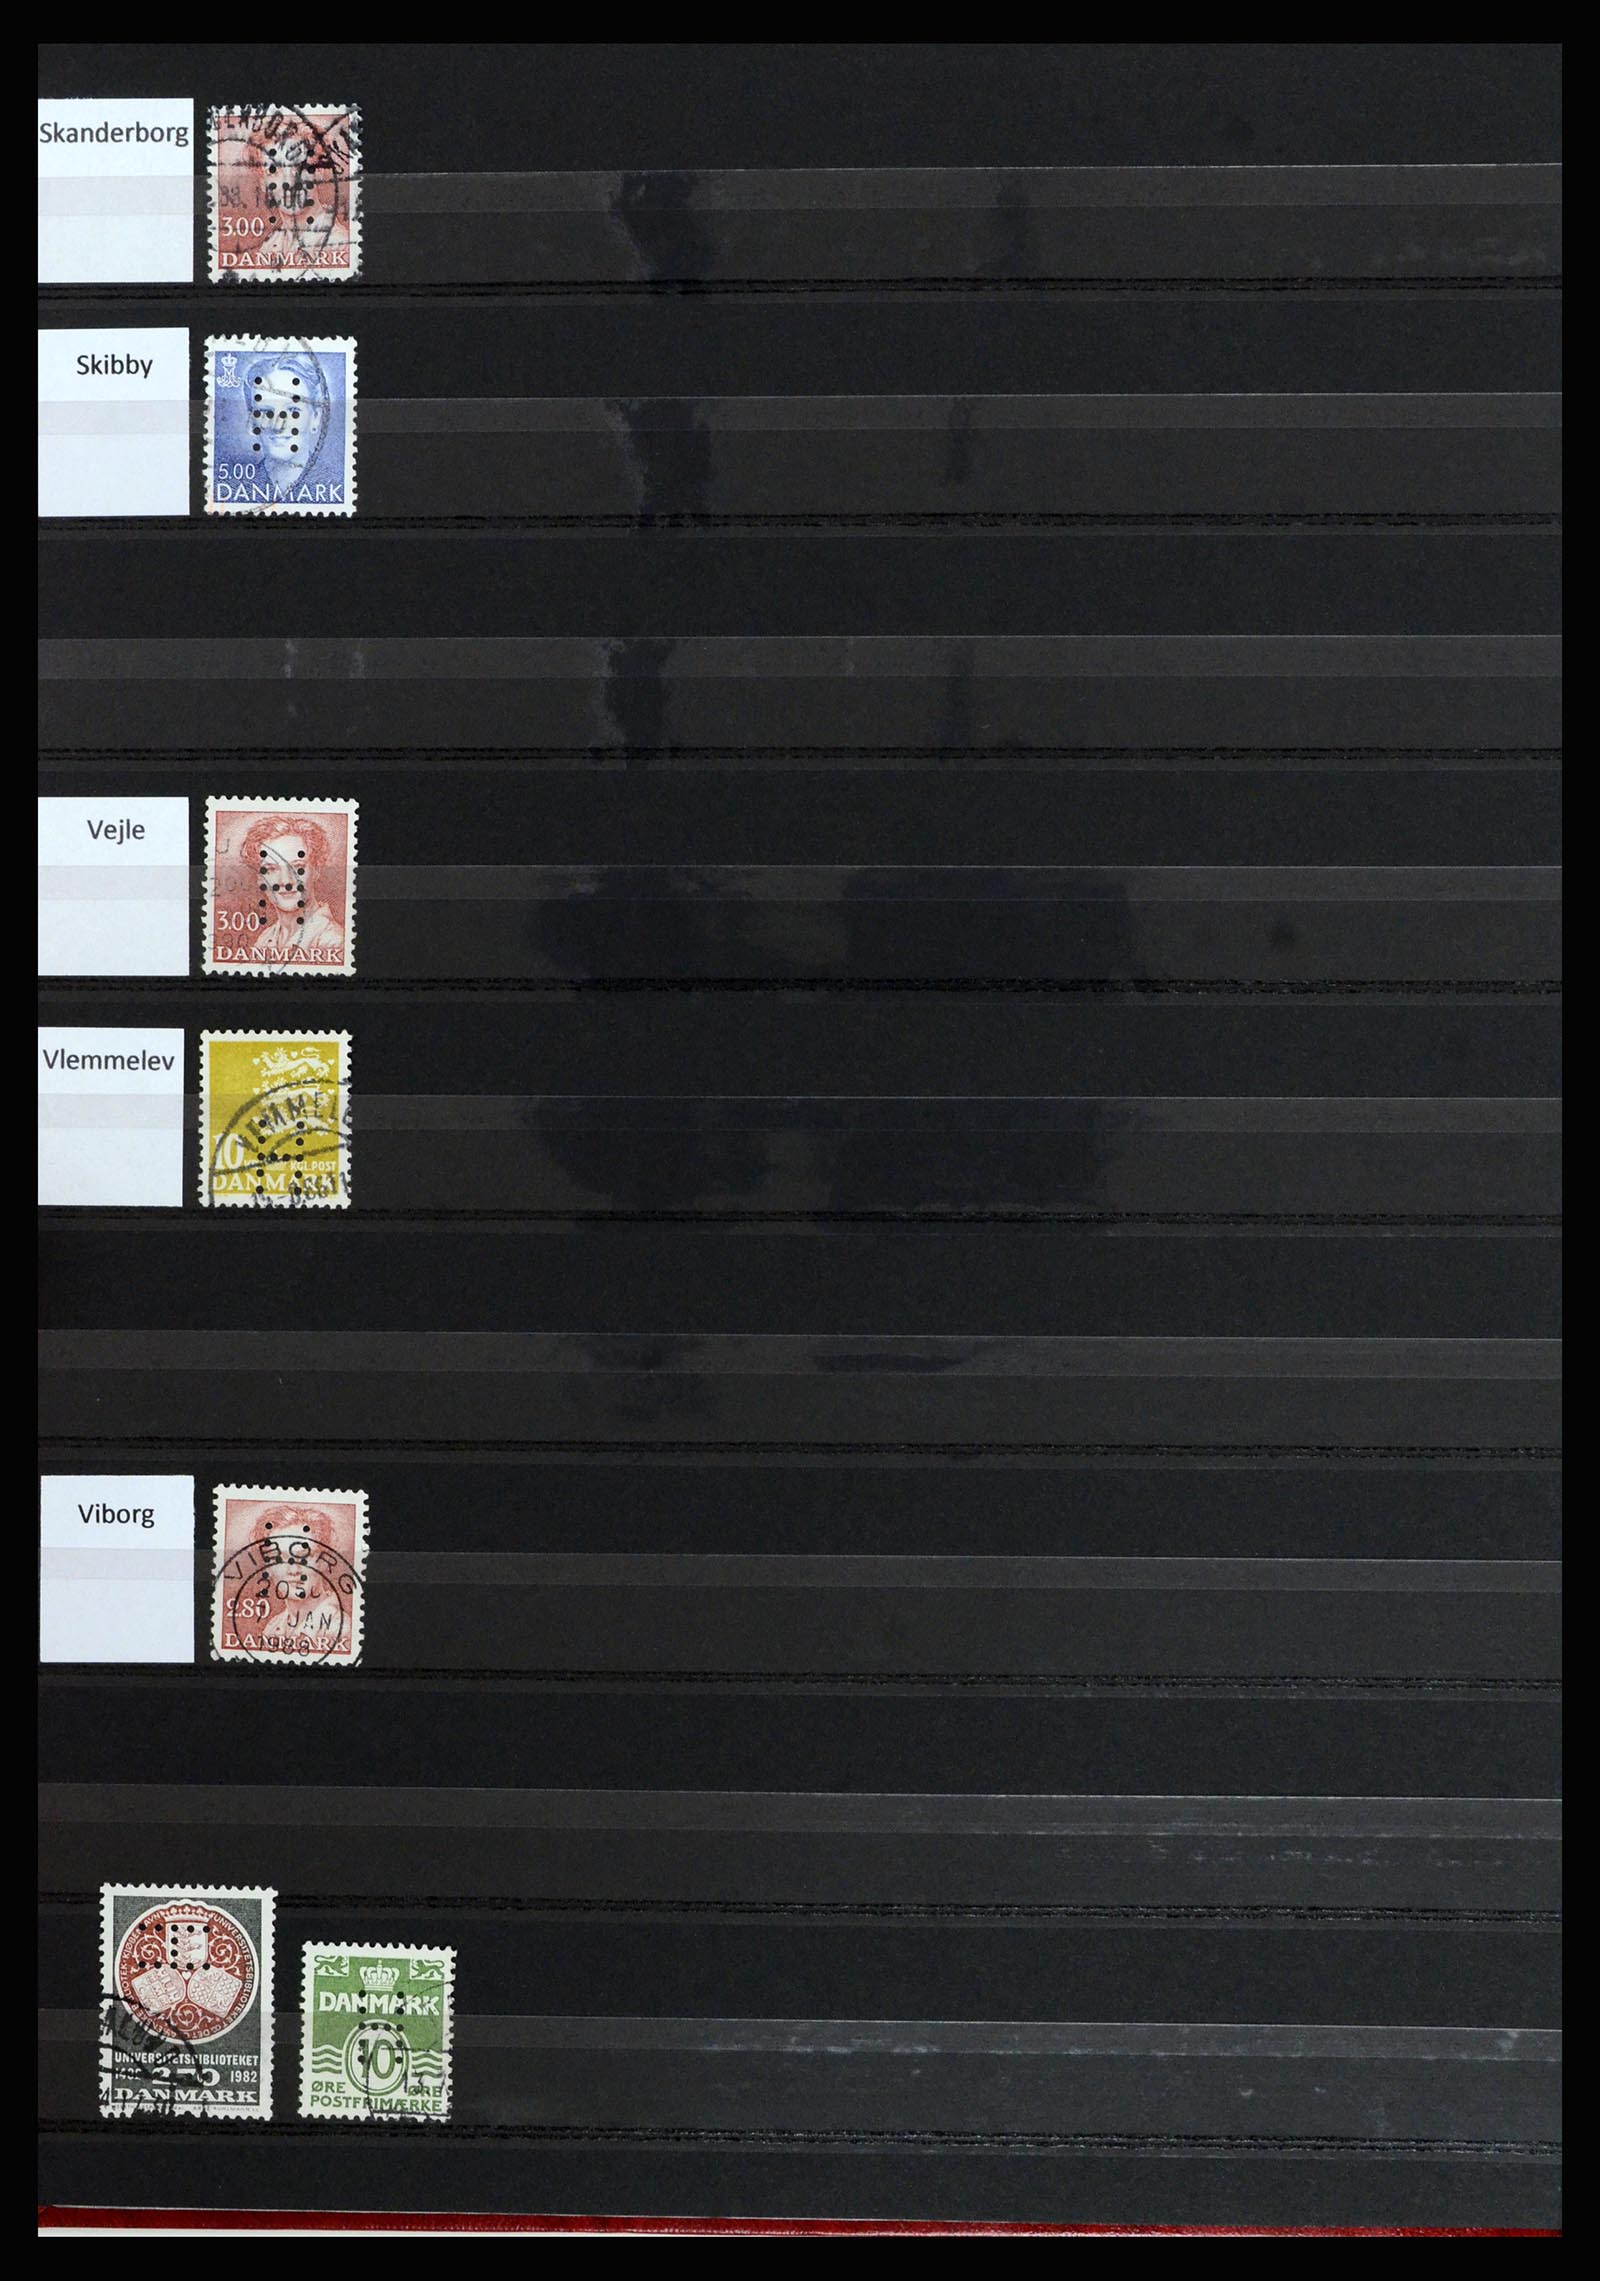 37056 024 - Stamp collection 37056 Denmark perfins.